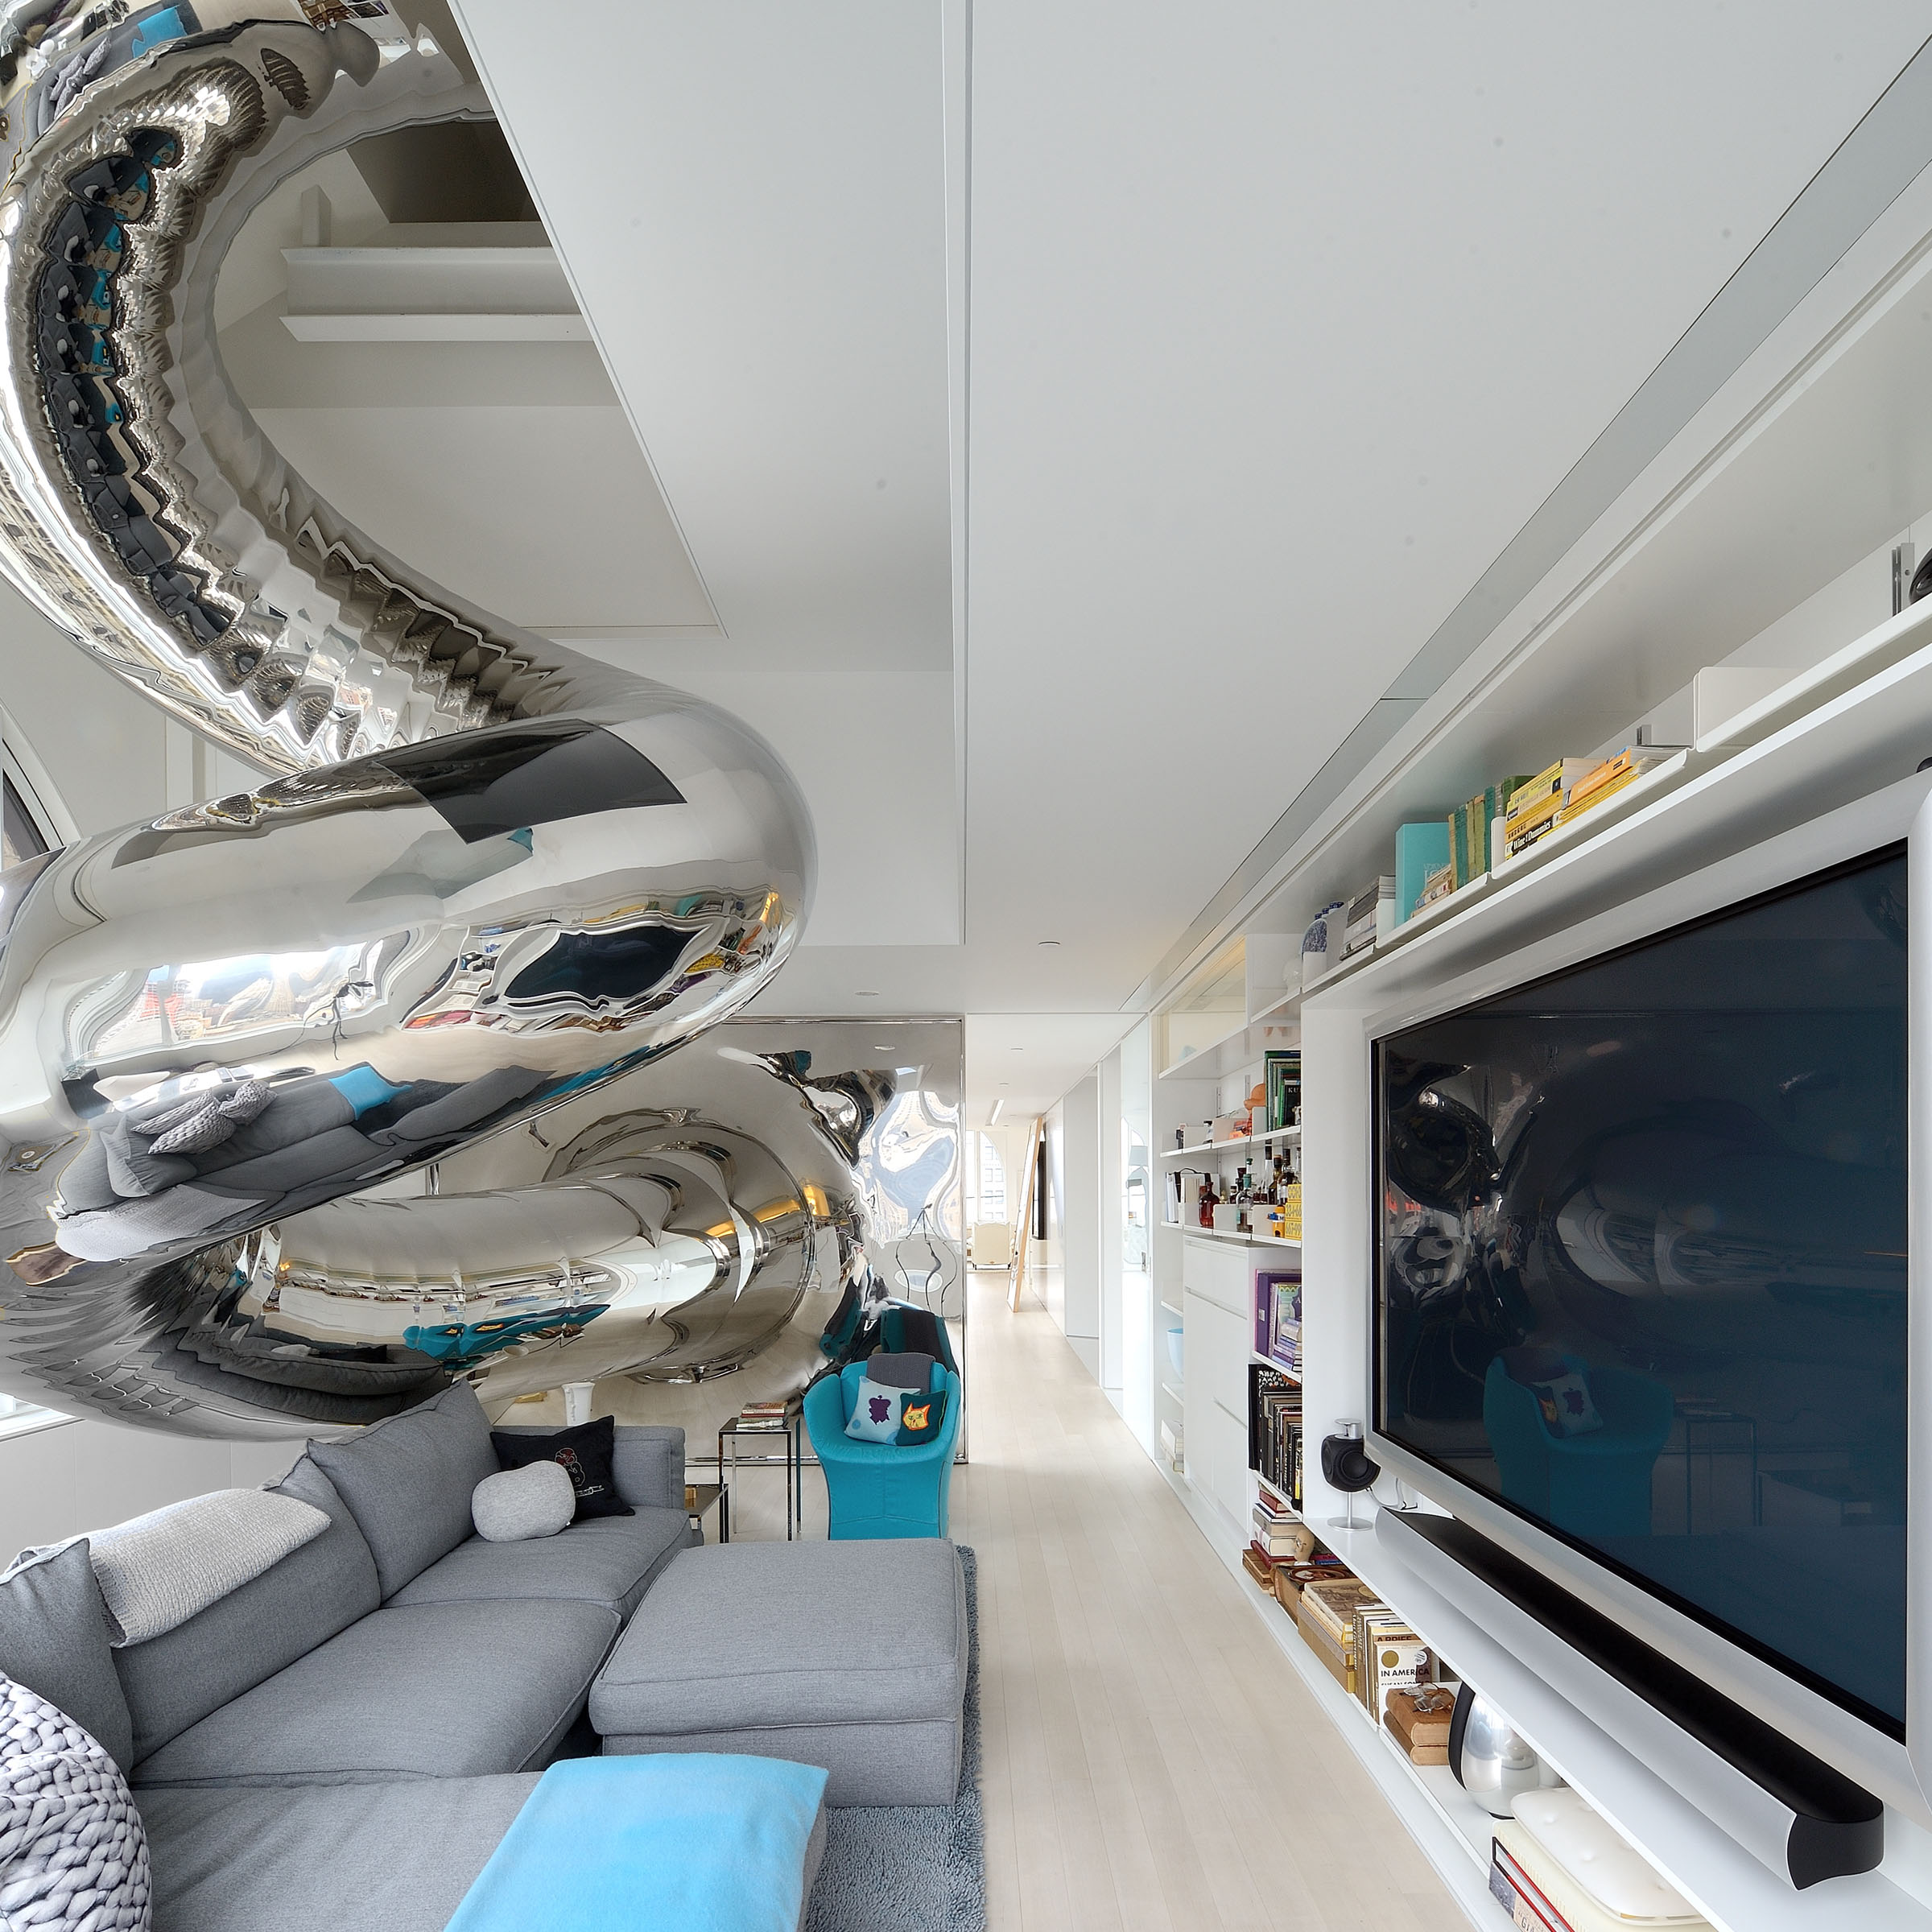 Skyhouse Slide / David Hotson Architect